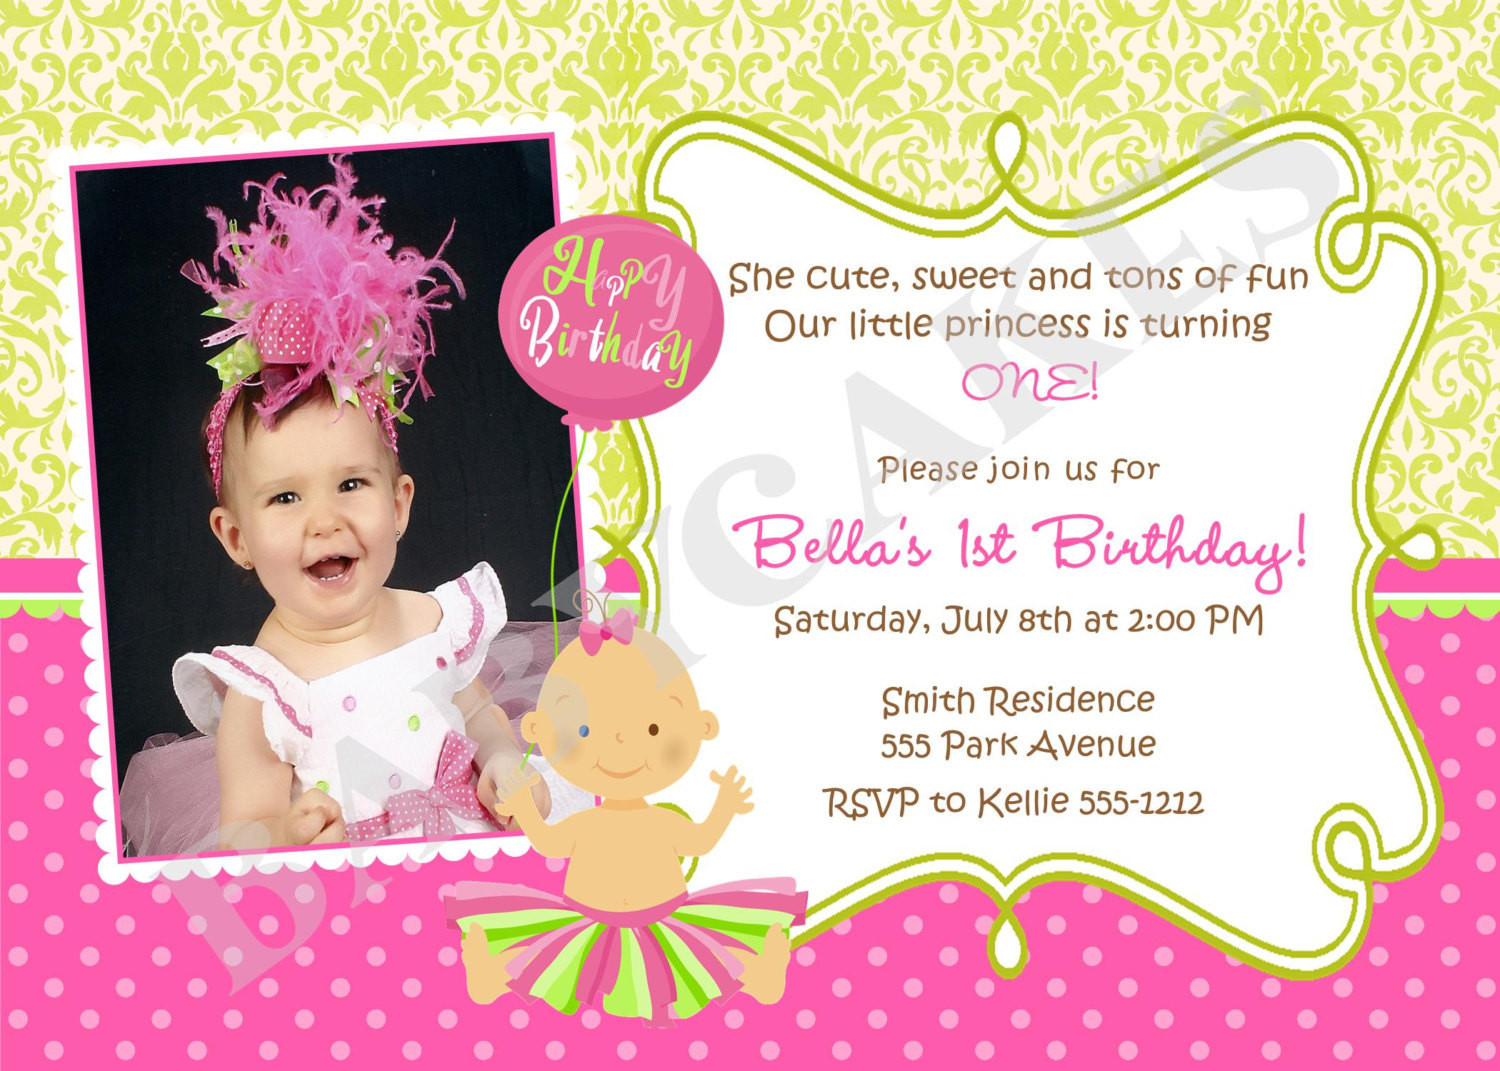 Best ideas about Princess 1st Birthday Invitations
. Save or Pin Princess Birthday 1st Birthday Invitation Tutu by jcbabycakes Now.